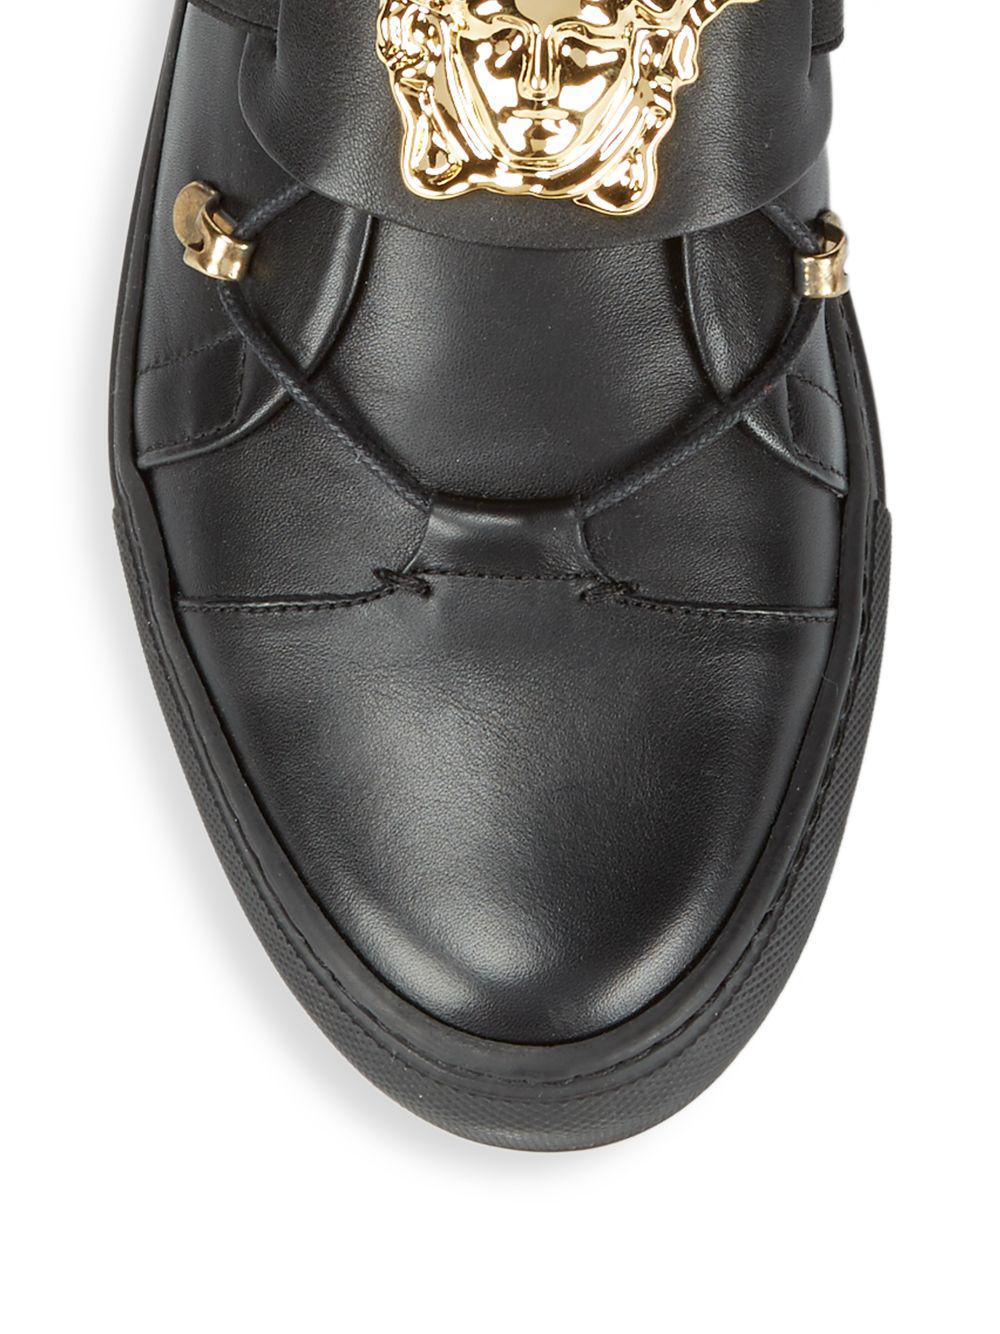 Versace Vitello Leather Sneakers in Black - Lyst